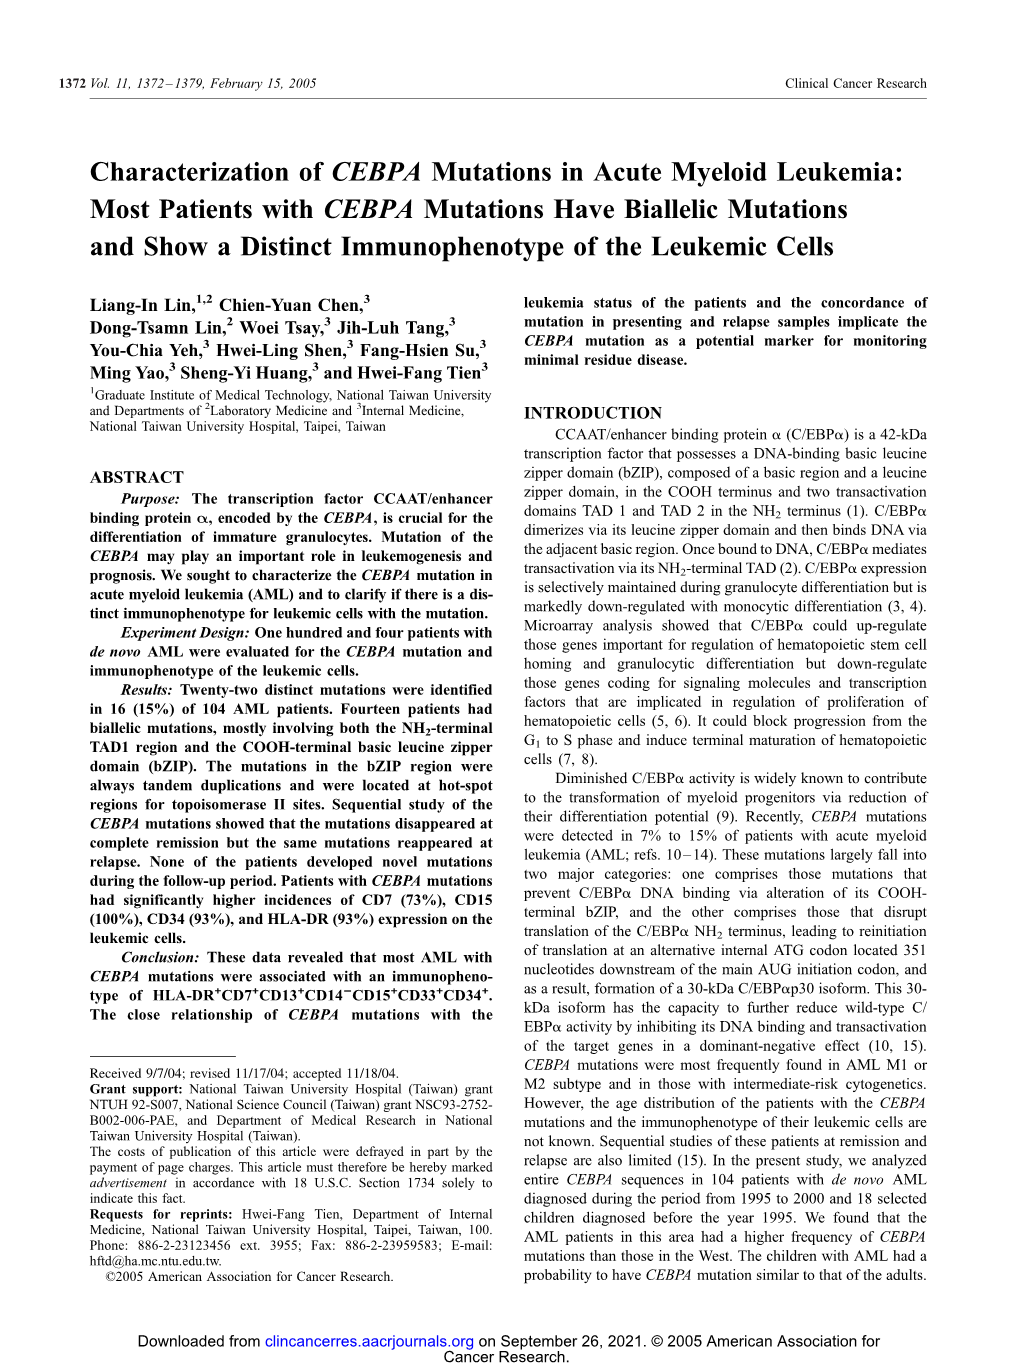 Characterization of CEBPA Mutations in Acute Myeloid Leukemia